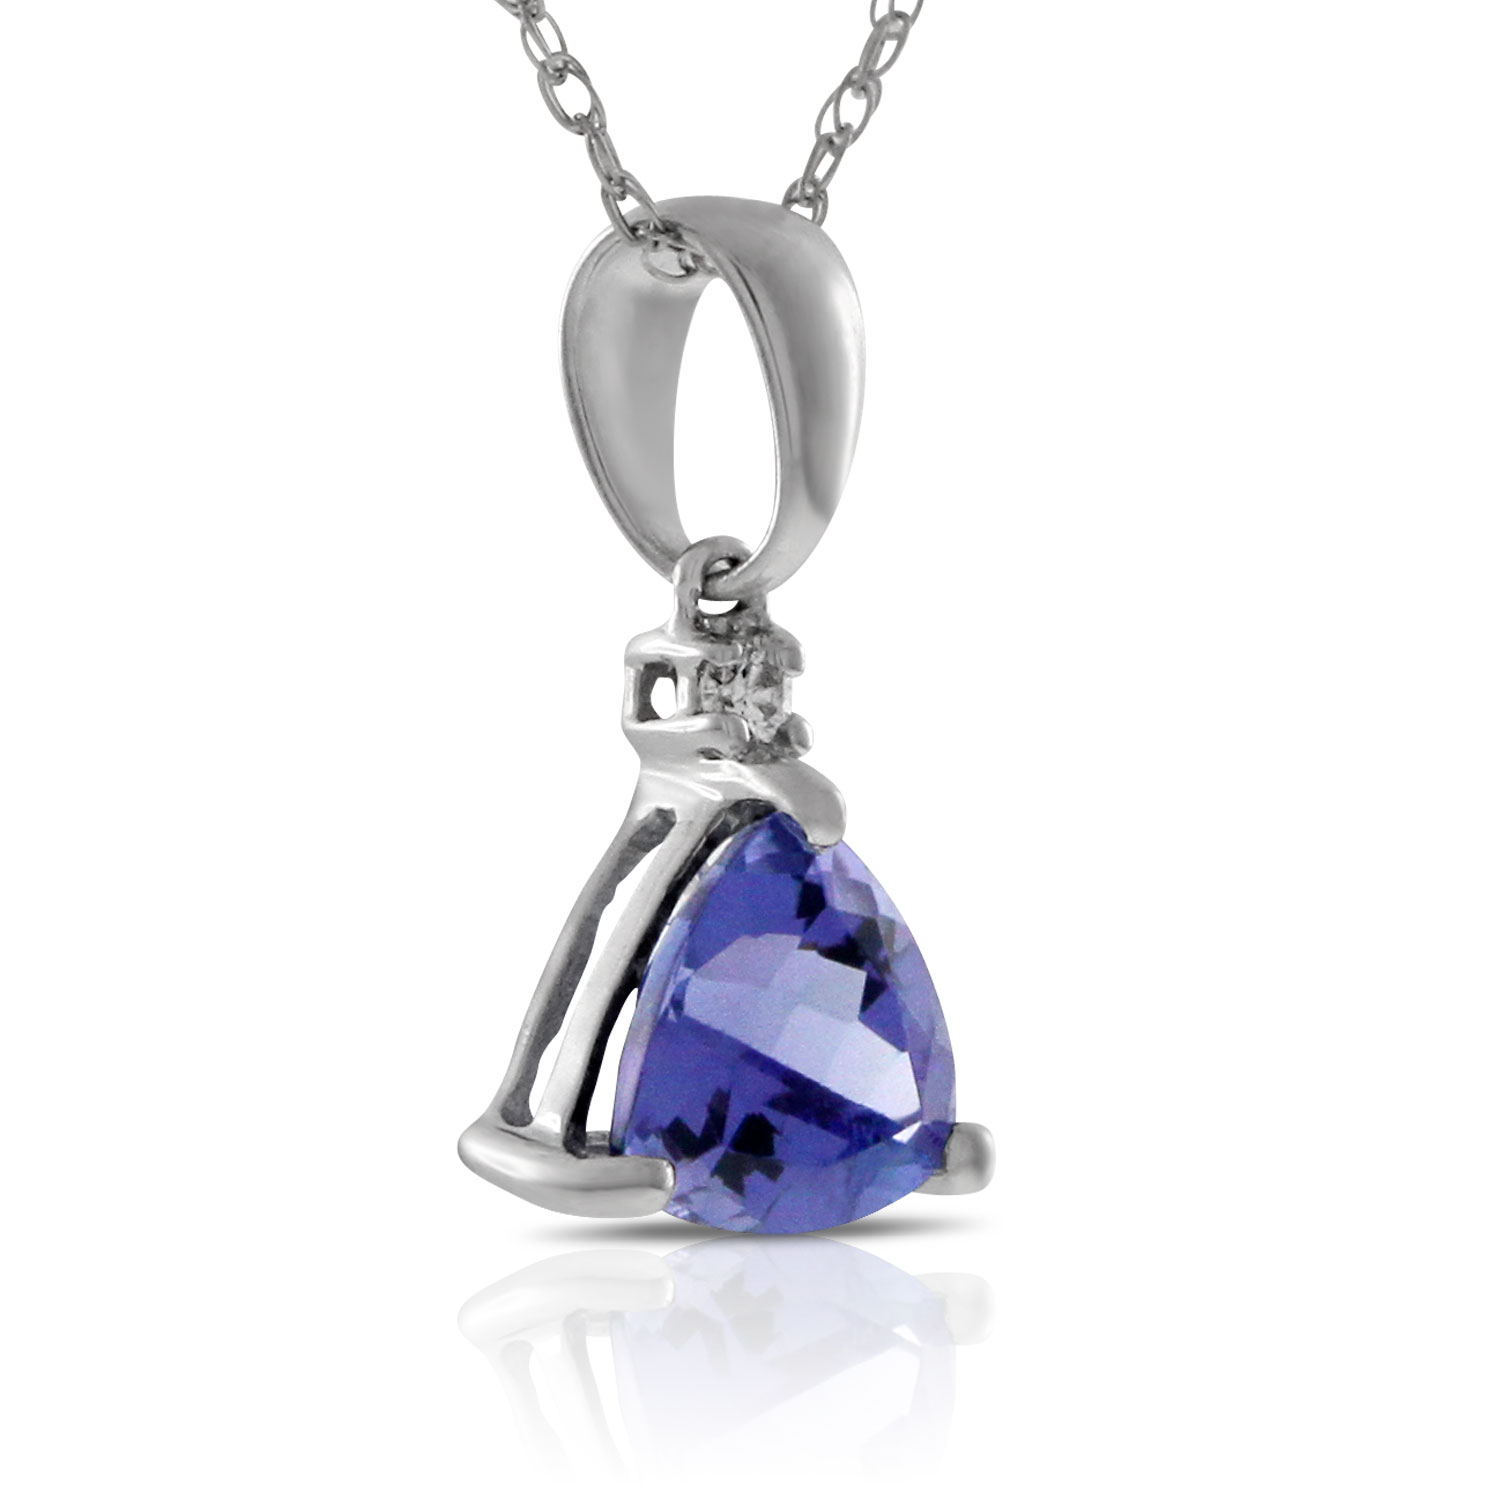 Ben Bridge Jewelers Women's Diamond Initial Pendant Necklace